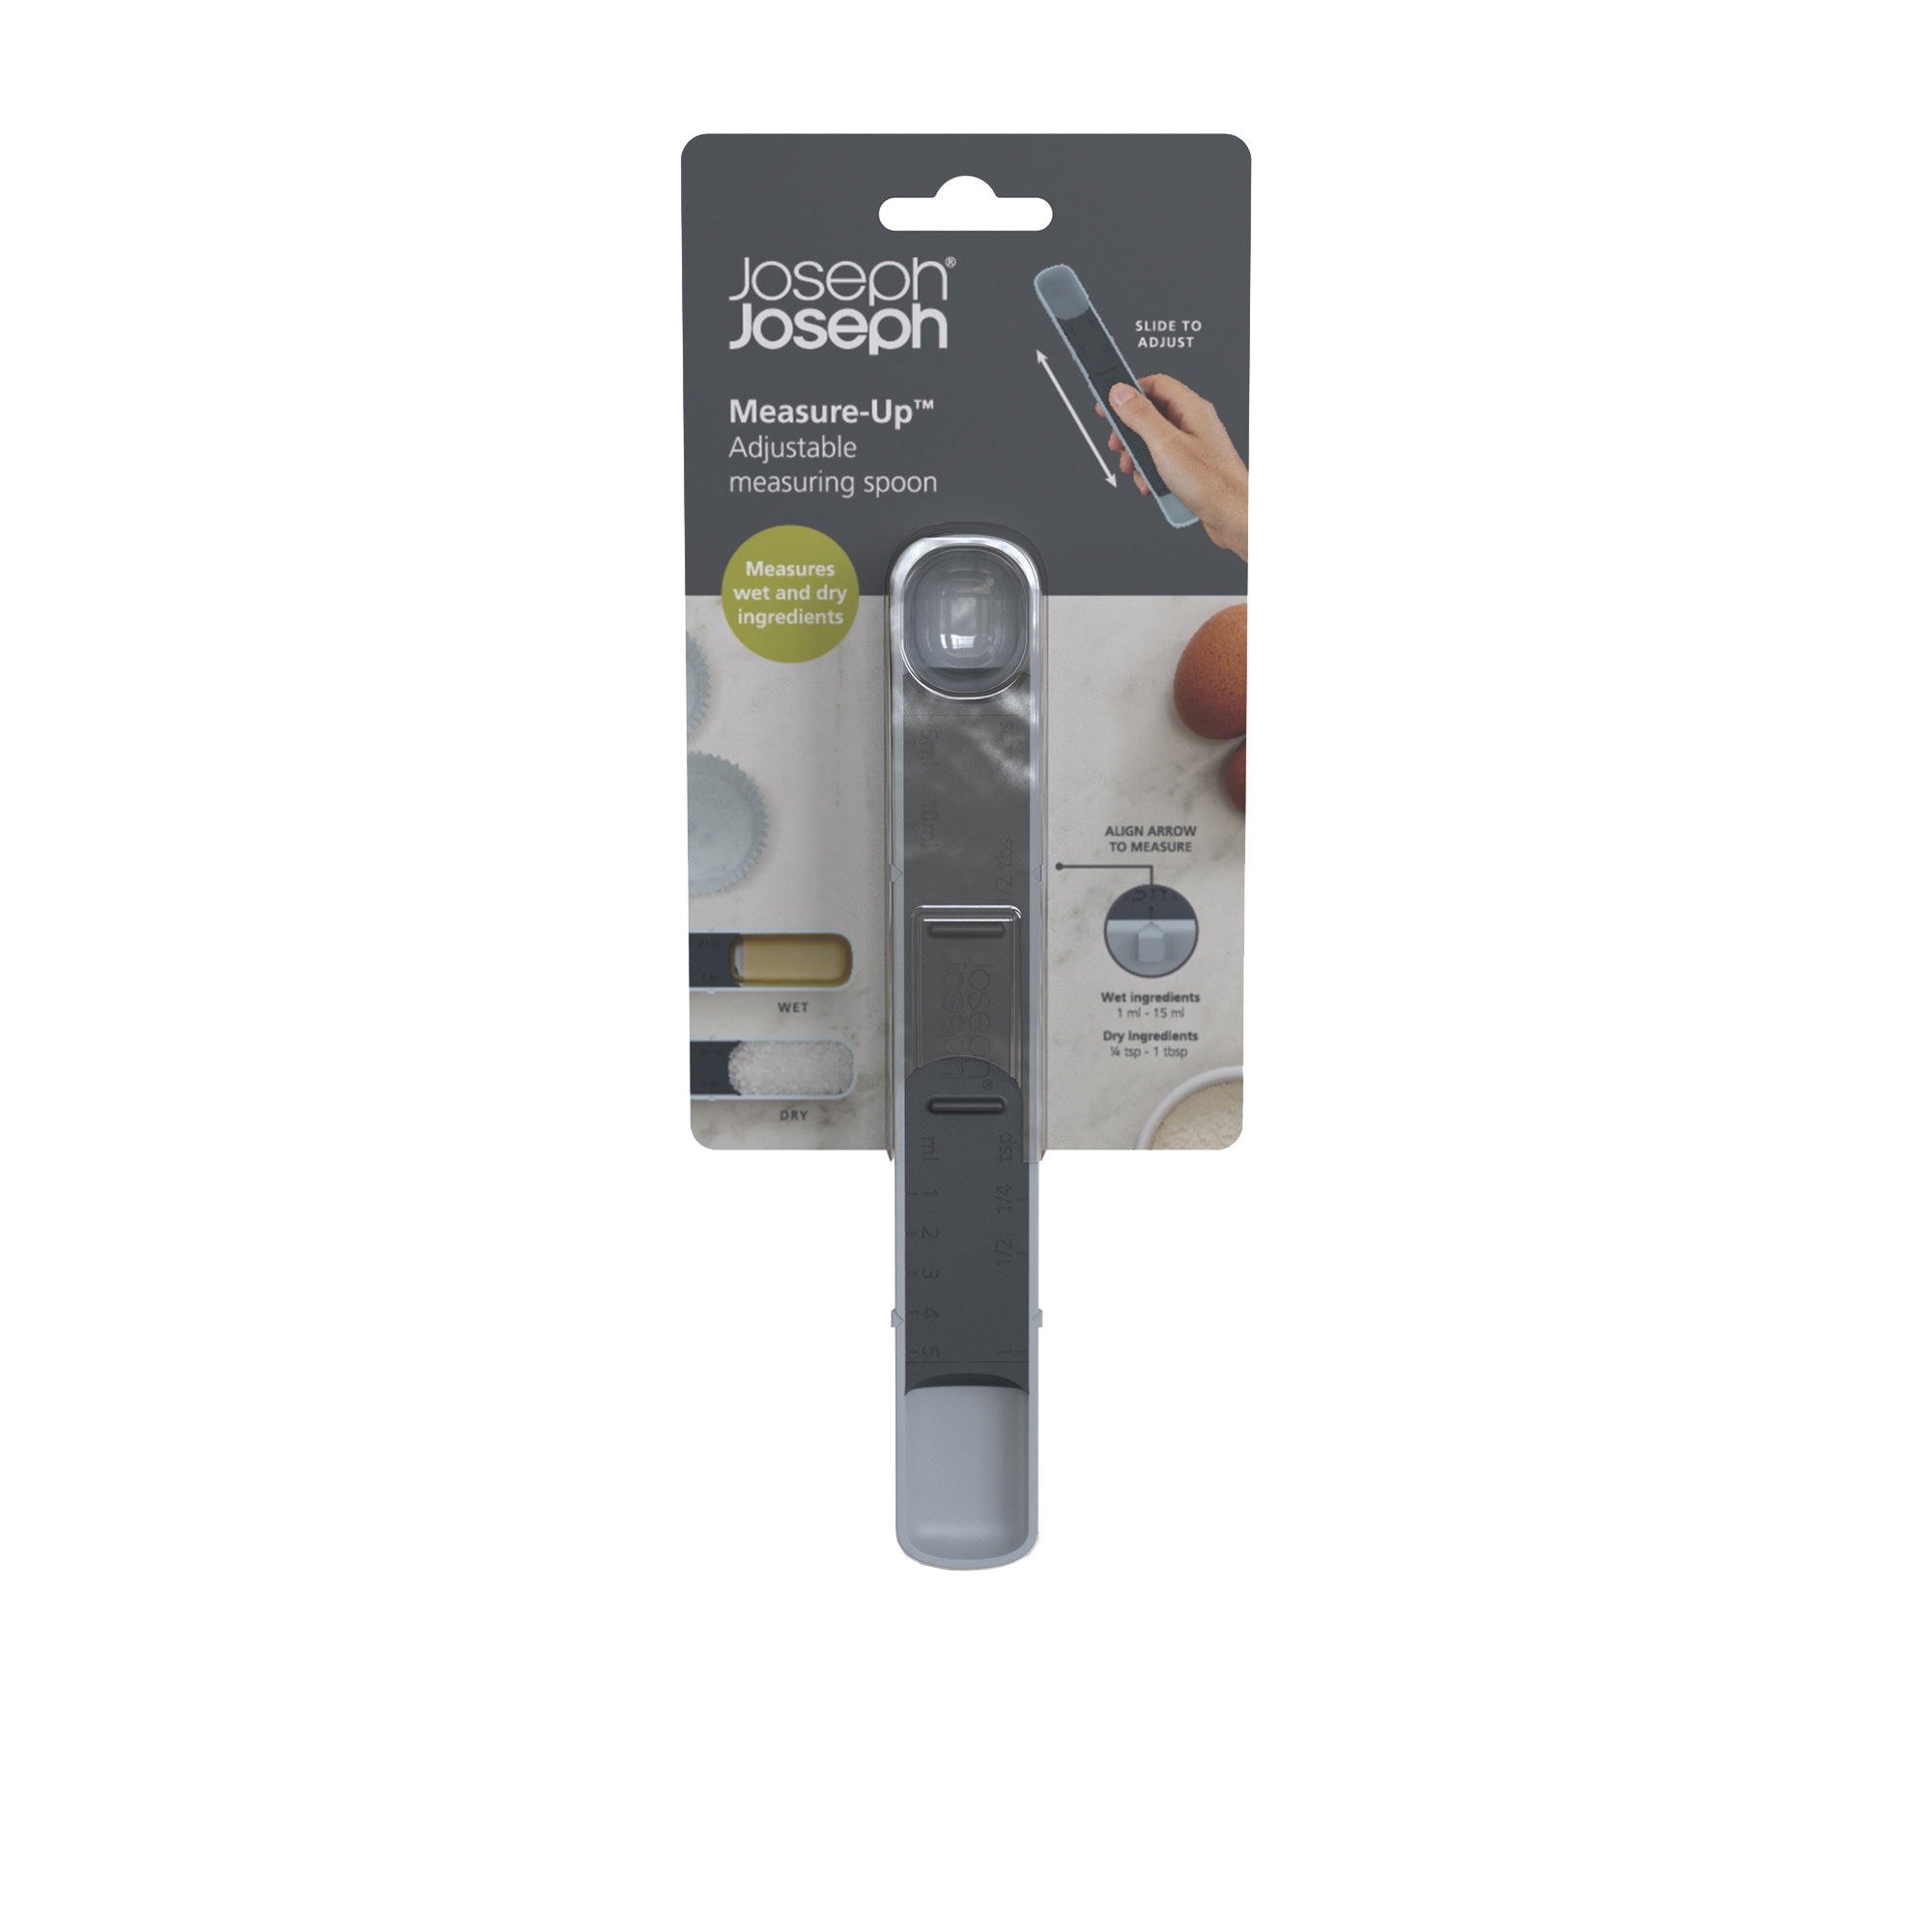 Joseph Joseph Measure-Up Adjustable Measuring Spoon Image 2